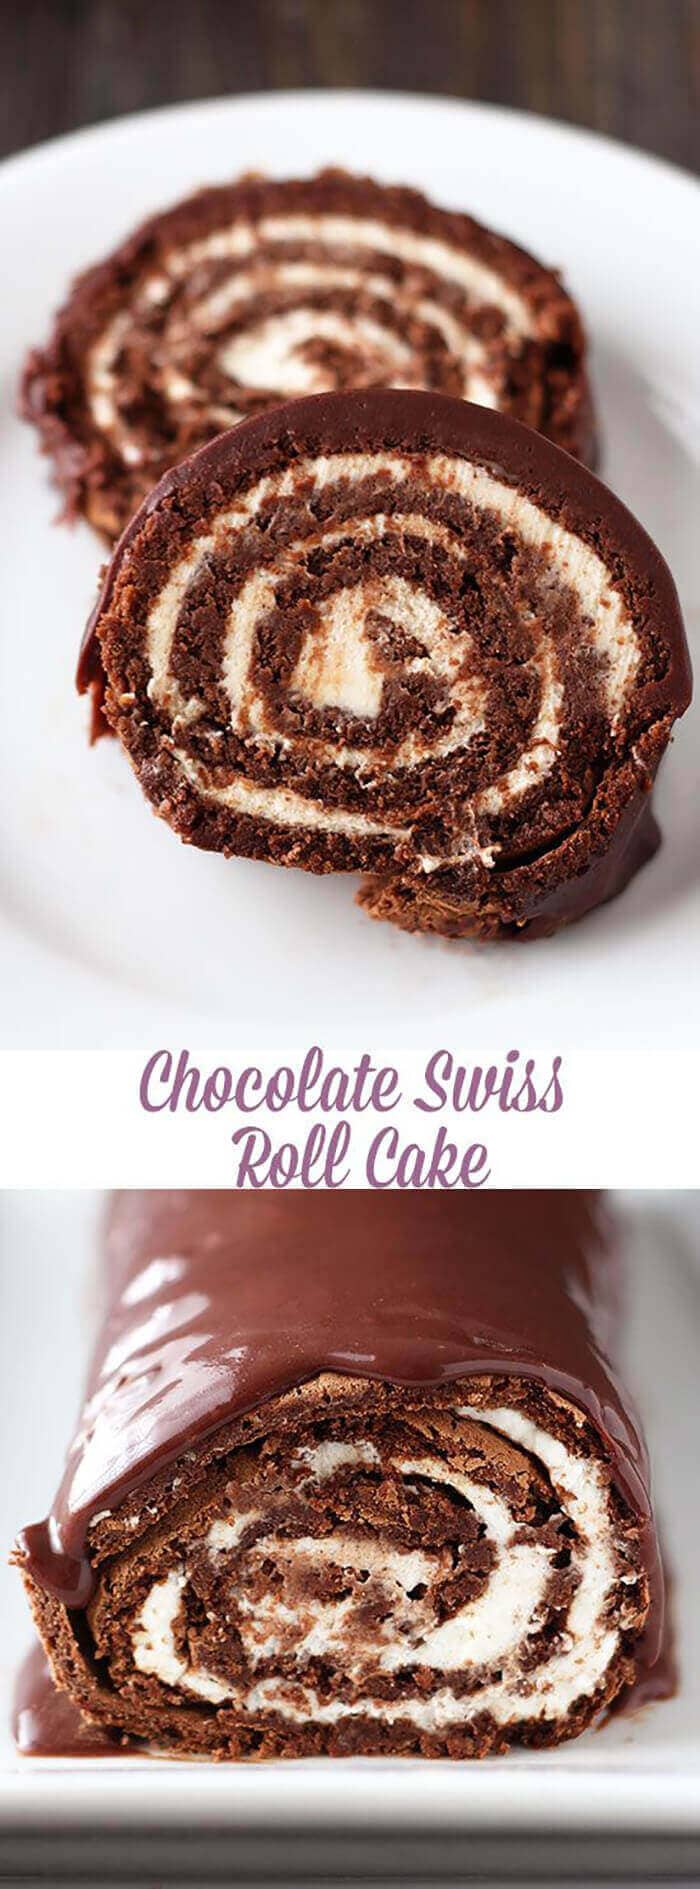 Chocolate Swiss Roll Cake